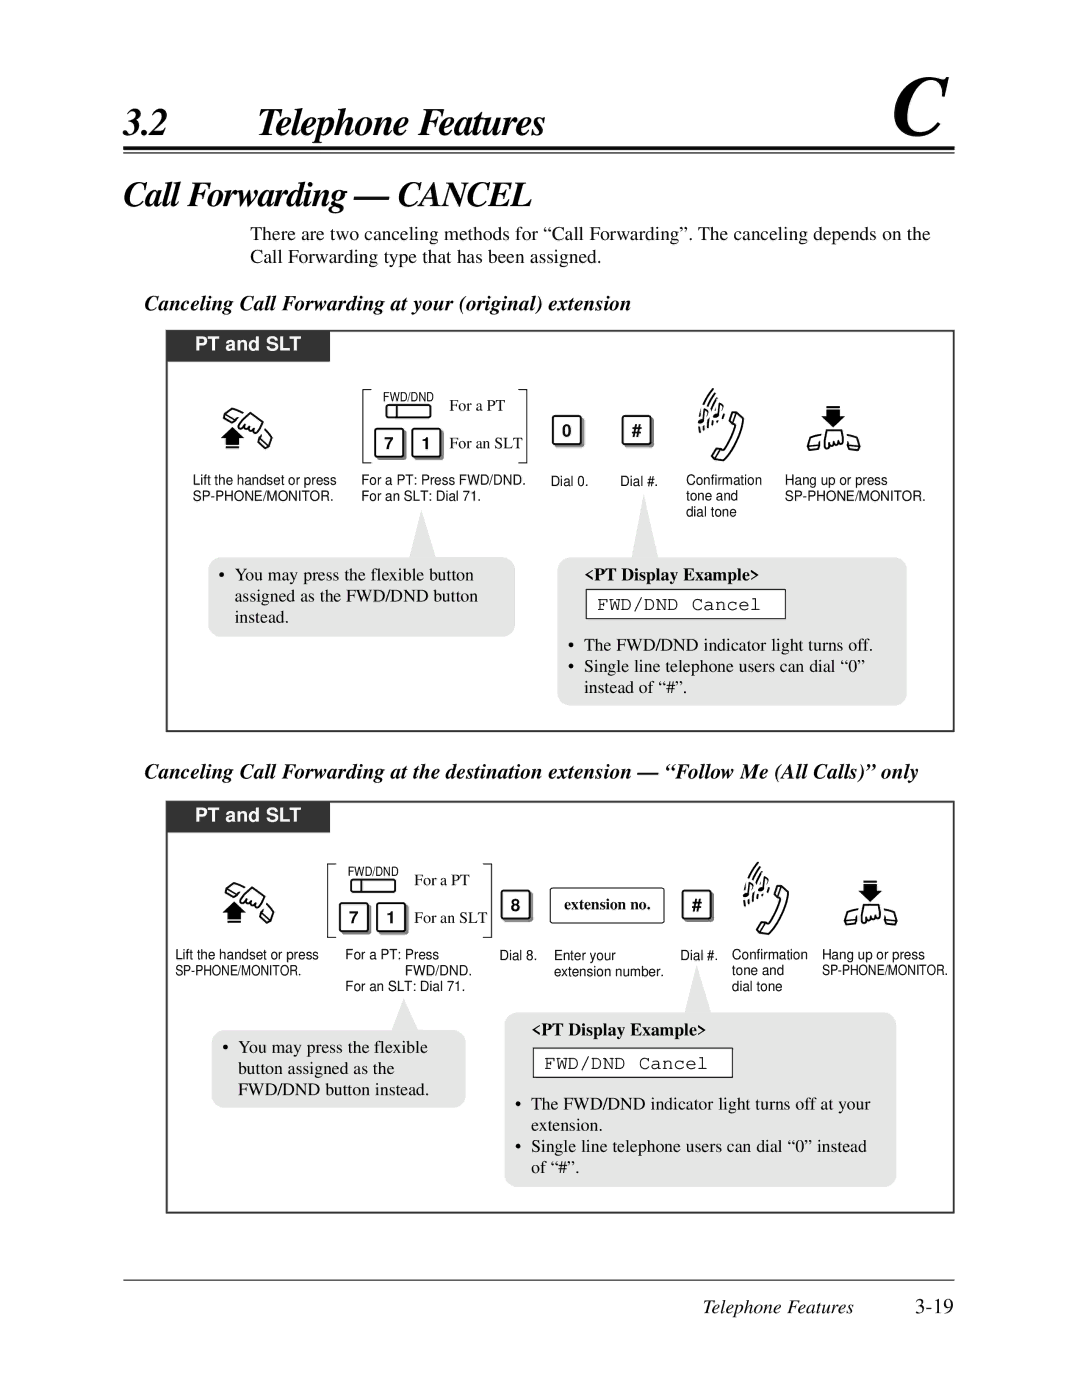 Panasonic KX-TA624 user manual Call Forwarding Cancel, Canceling Call Forwarding at your original extension, FWD/DND Cancel 